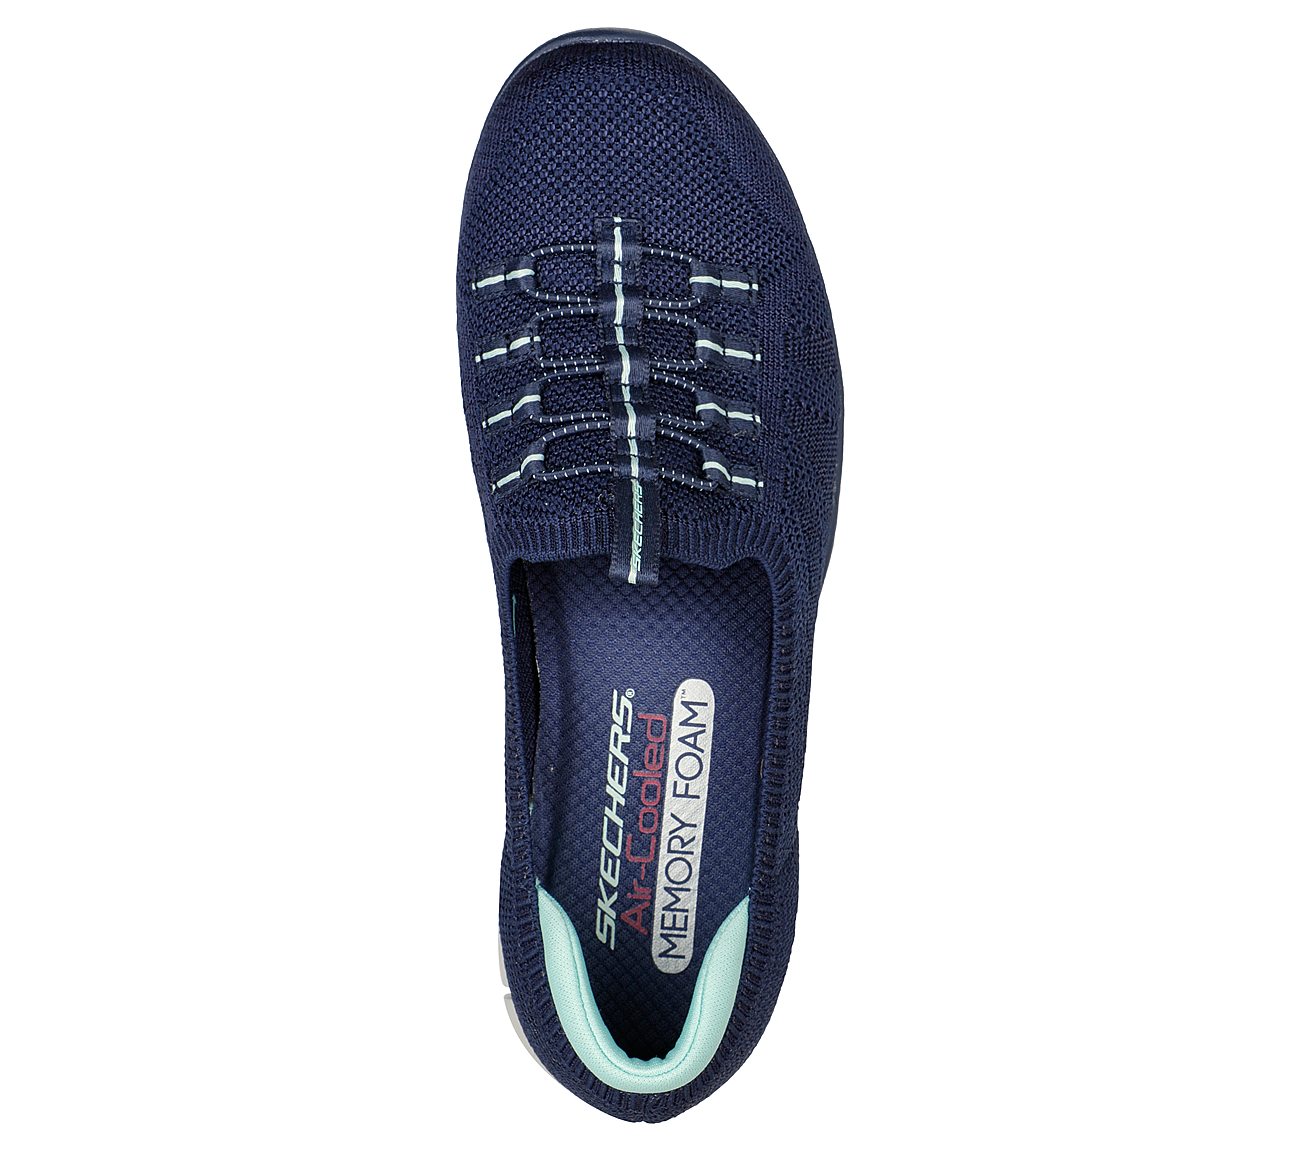 GRATIS - MORE PLAYFUL, NAVY/LIGHT BLUE Footwear Top View